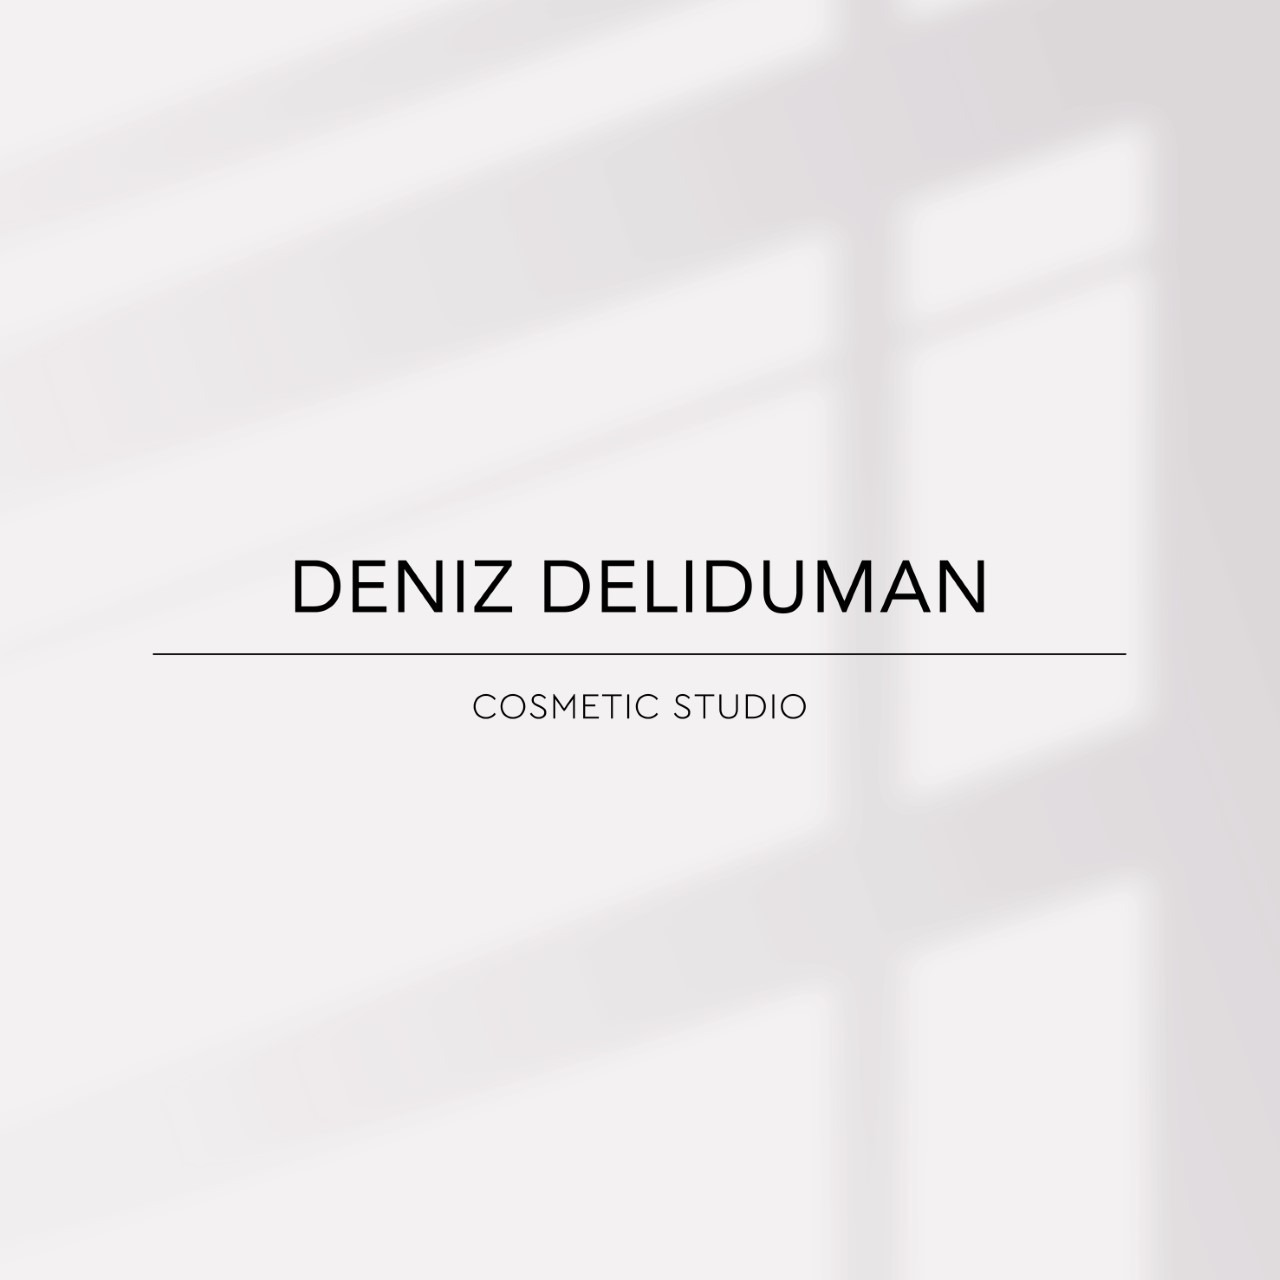 Deniz Deliduman Cosmetic Studio  